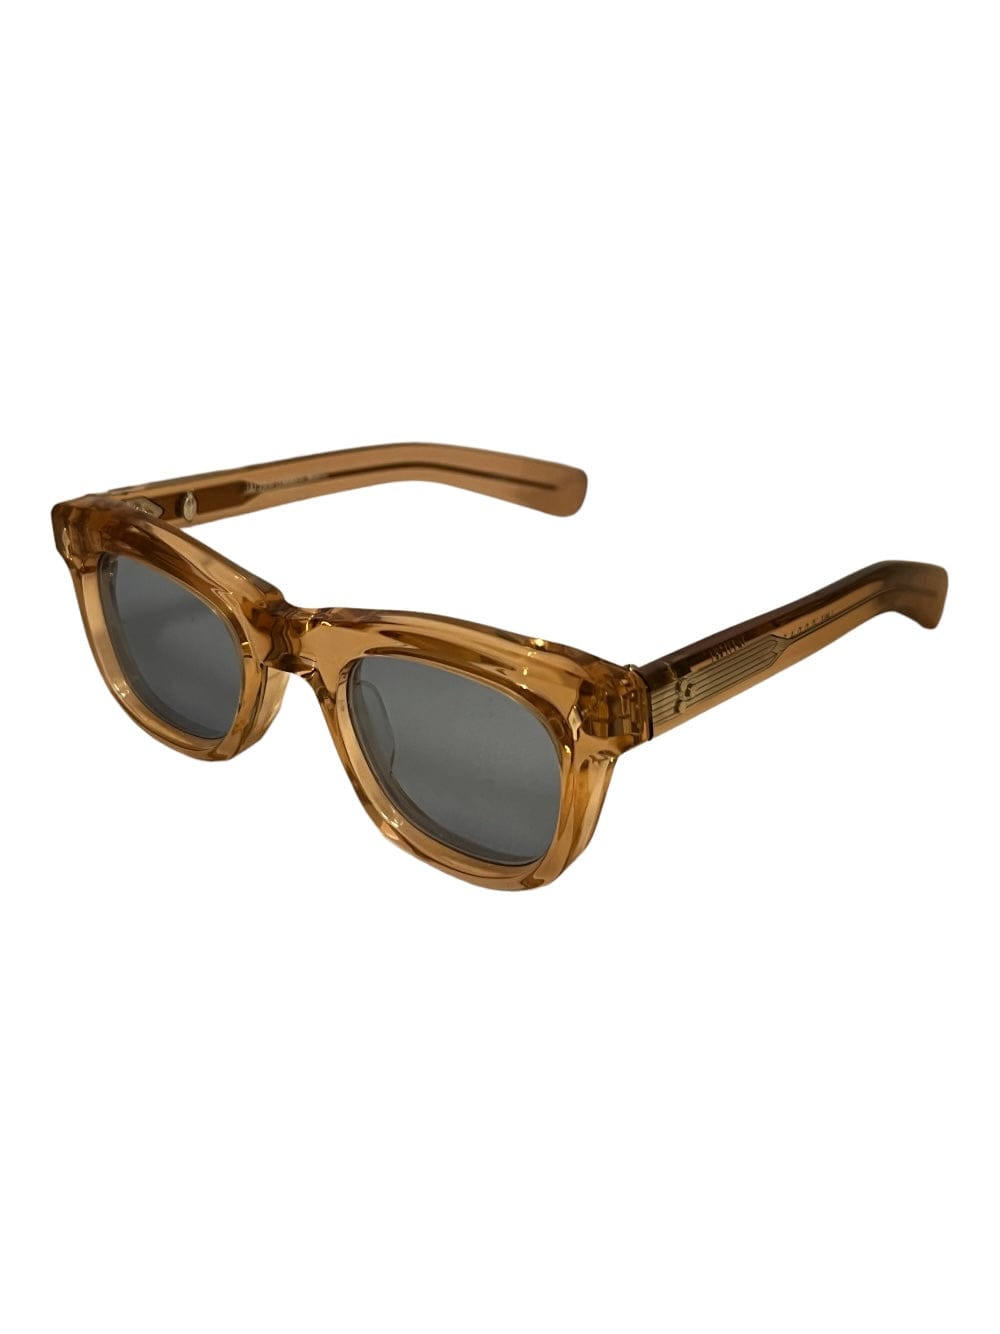 Godard Sunglasses